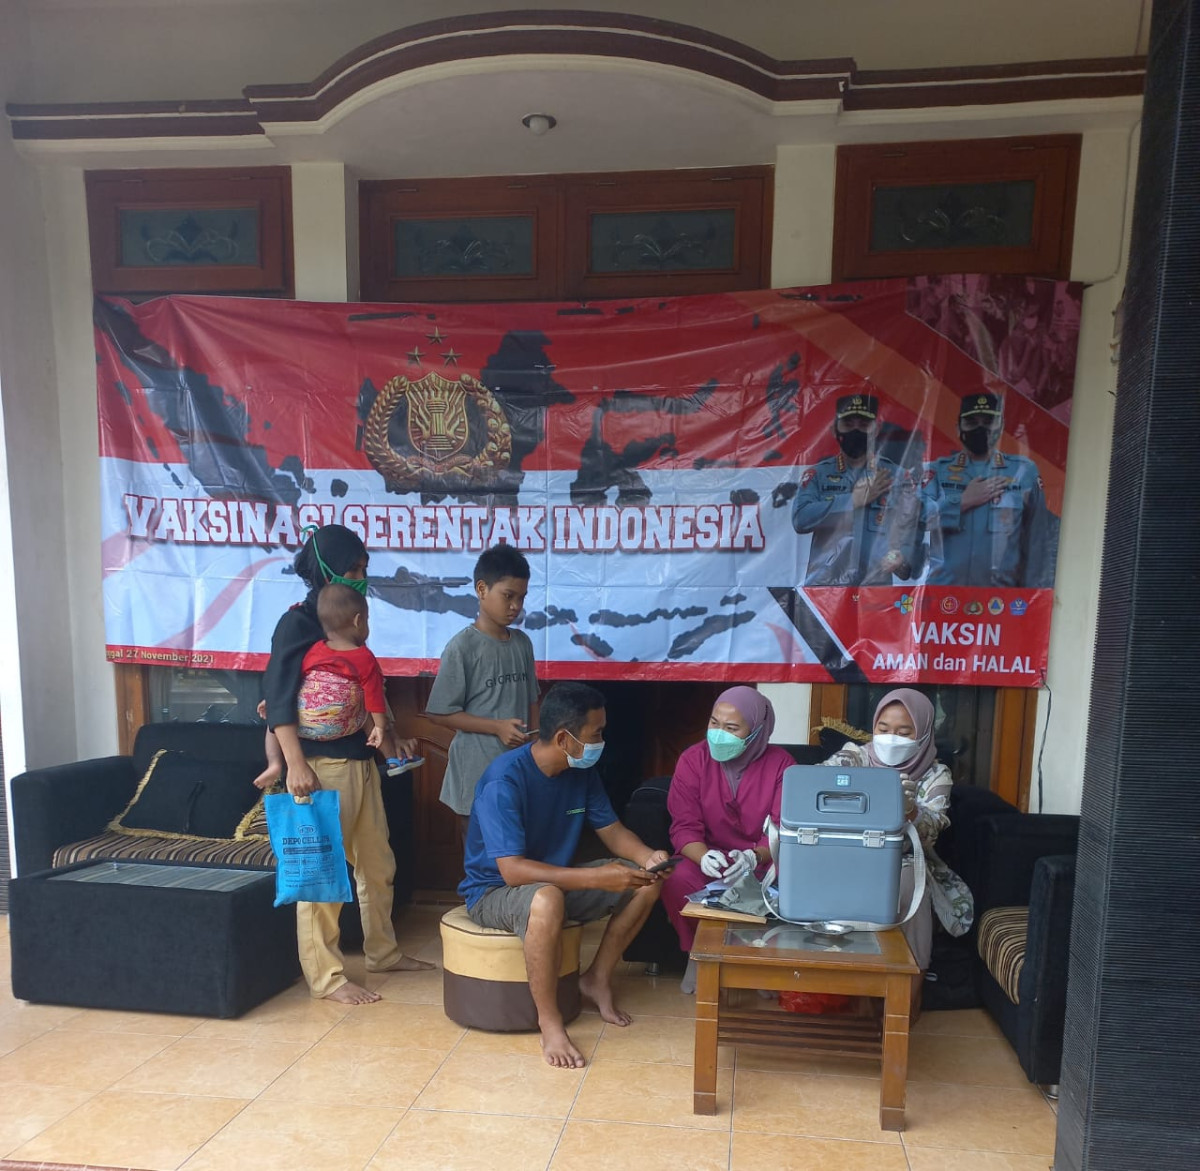 Vaksinasi covid-19 Serentak Indonesia